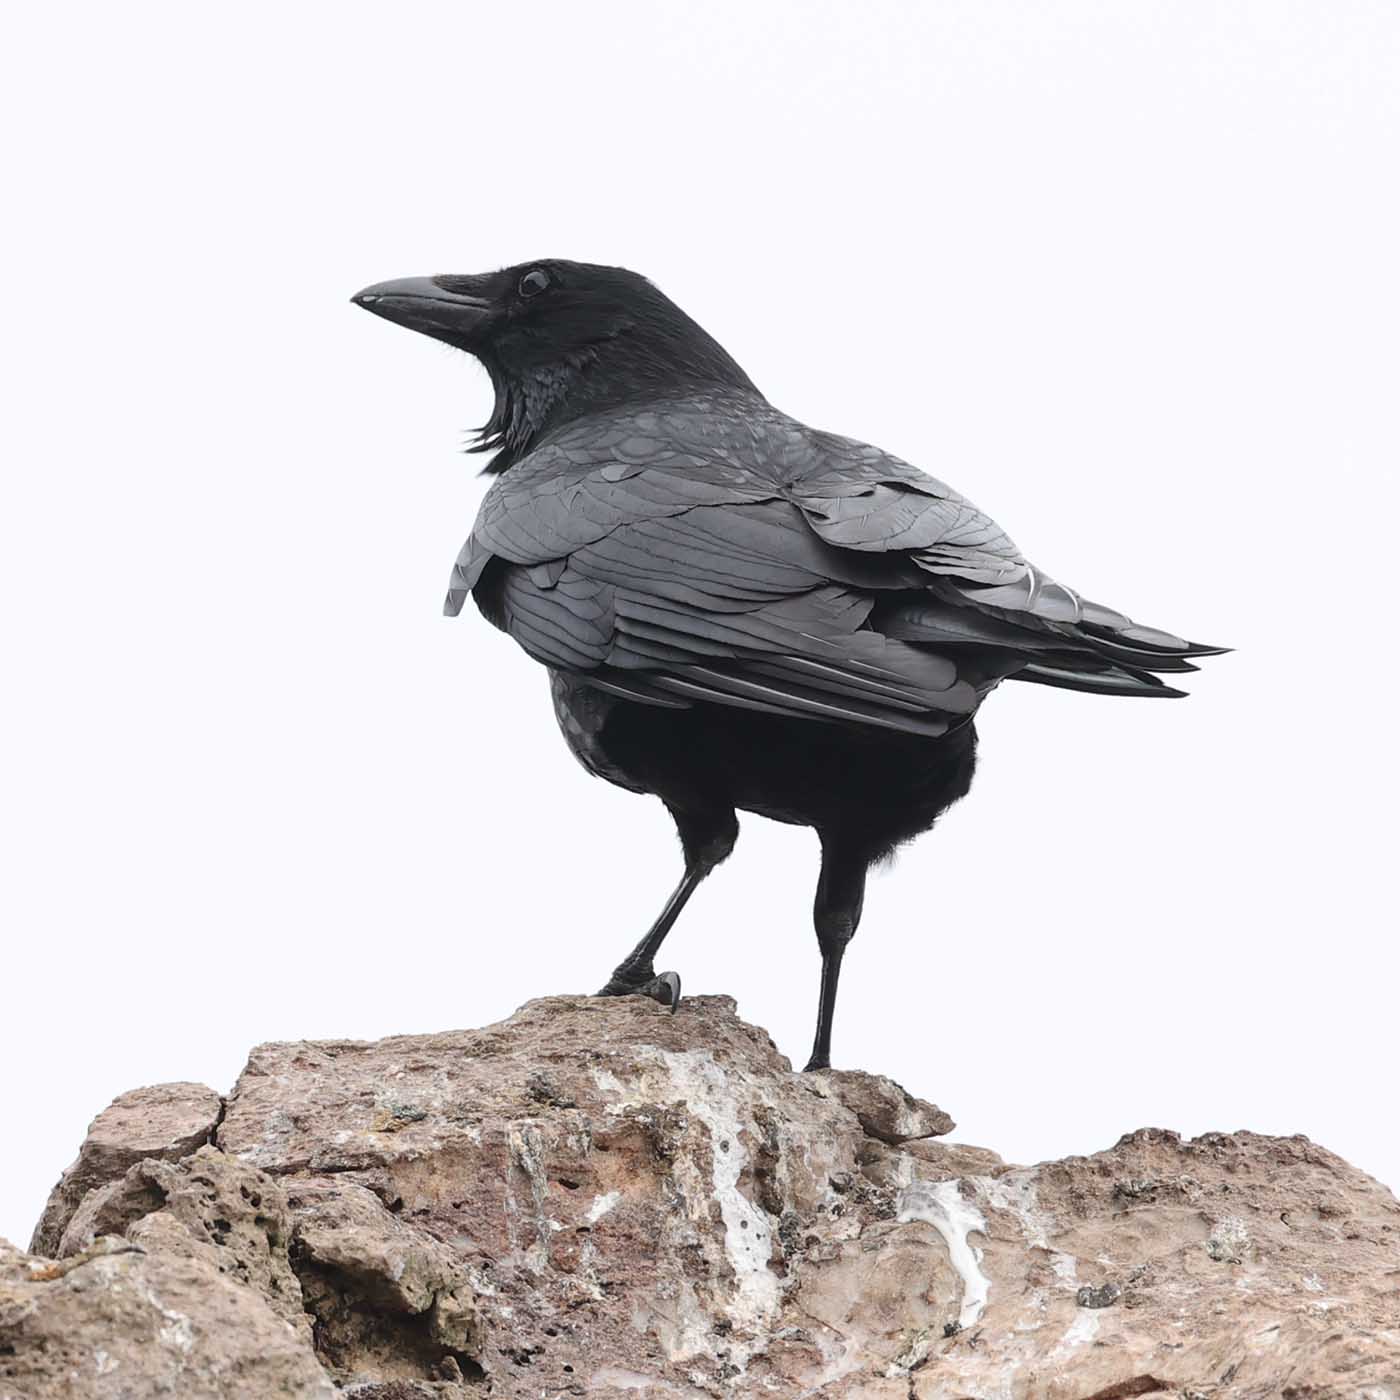 Raven by Steve Hopper at Berry Head